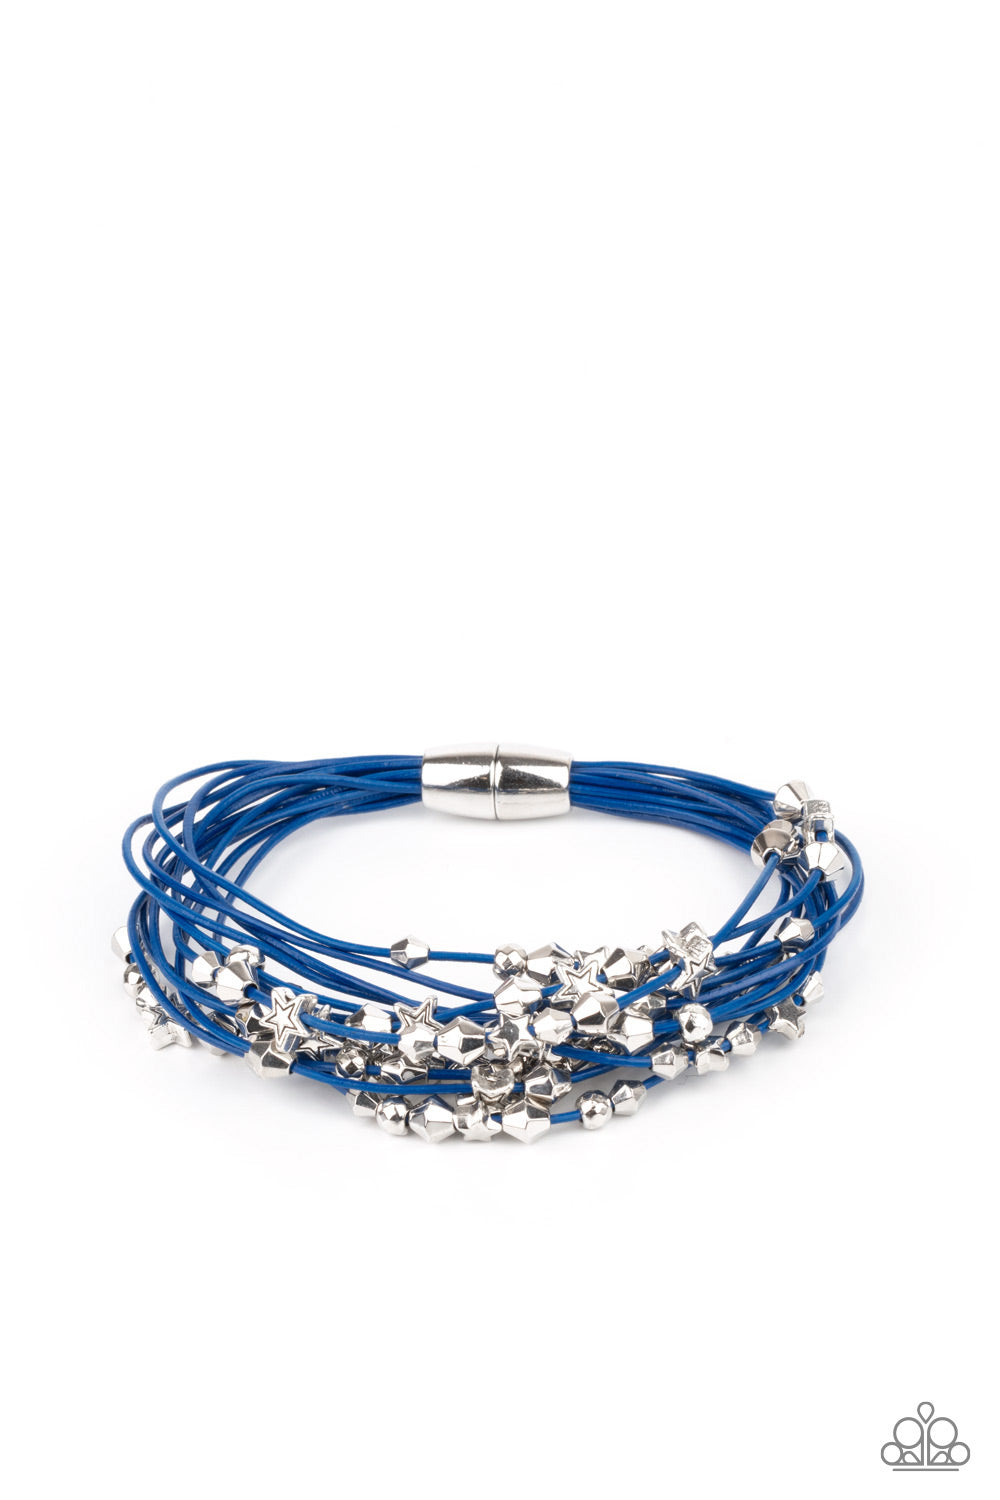 Star-Studded Affair Bracelet (Blue, Red)